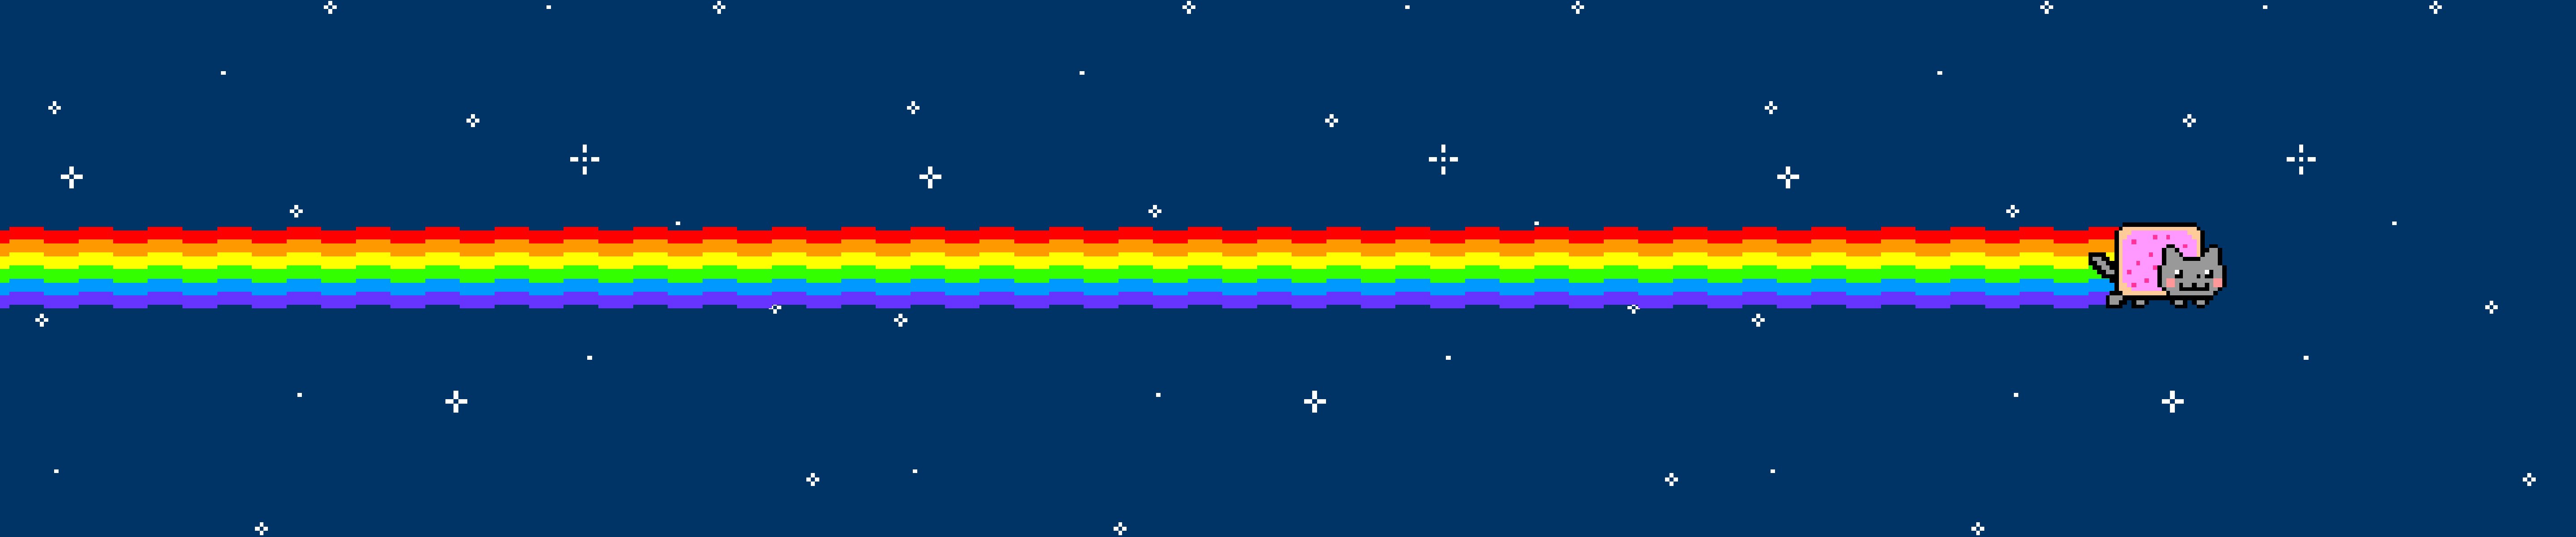 Free download Nyan Cat wallpaper ID:498879 triple screen 5760x1200 for PC